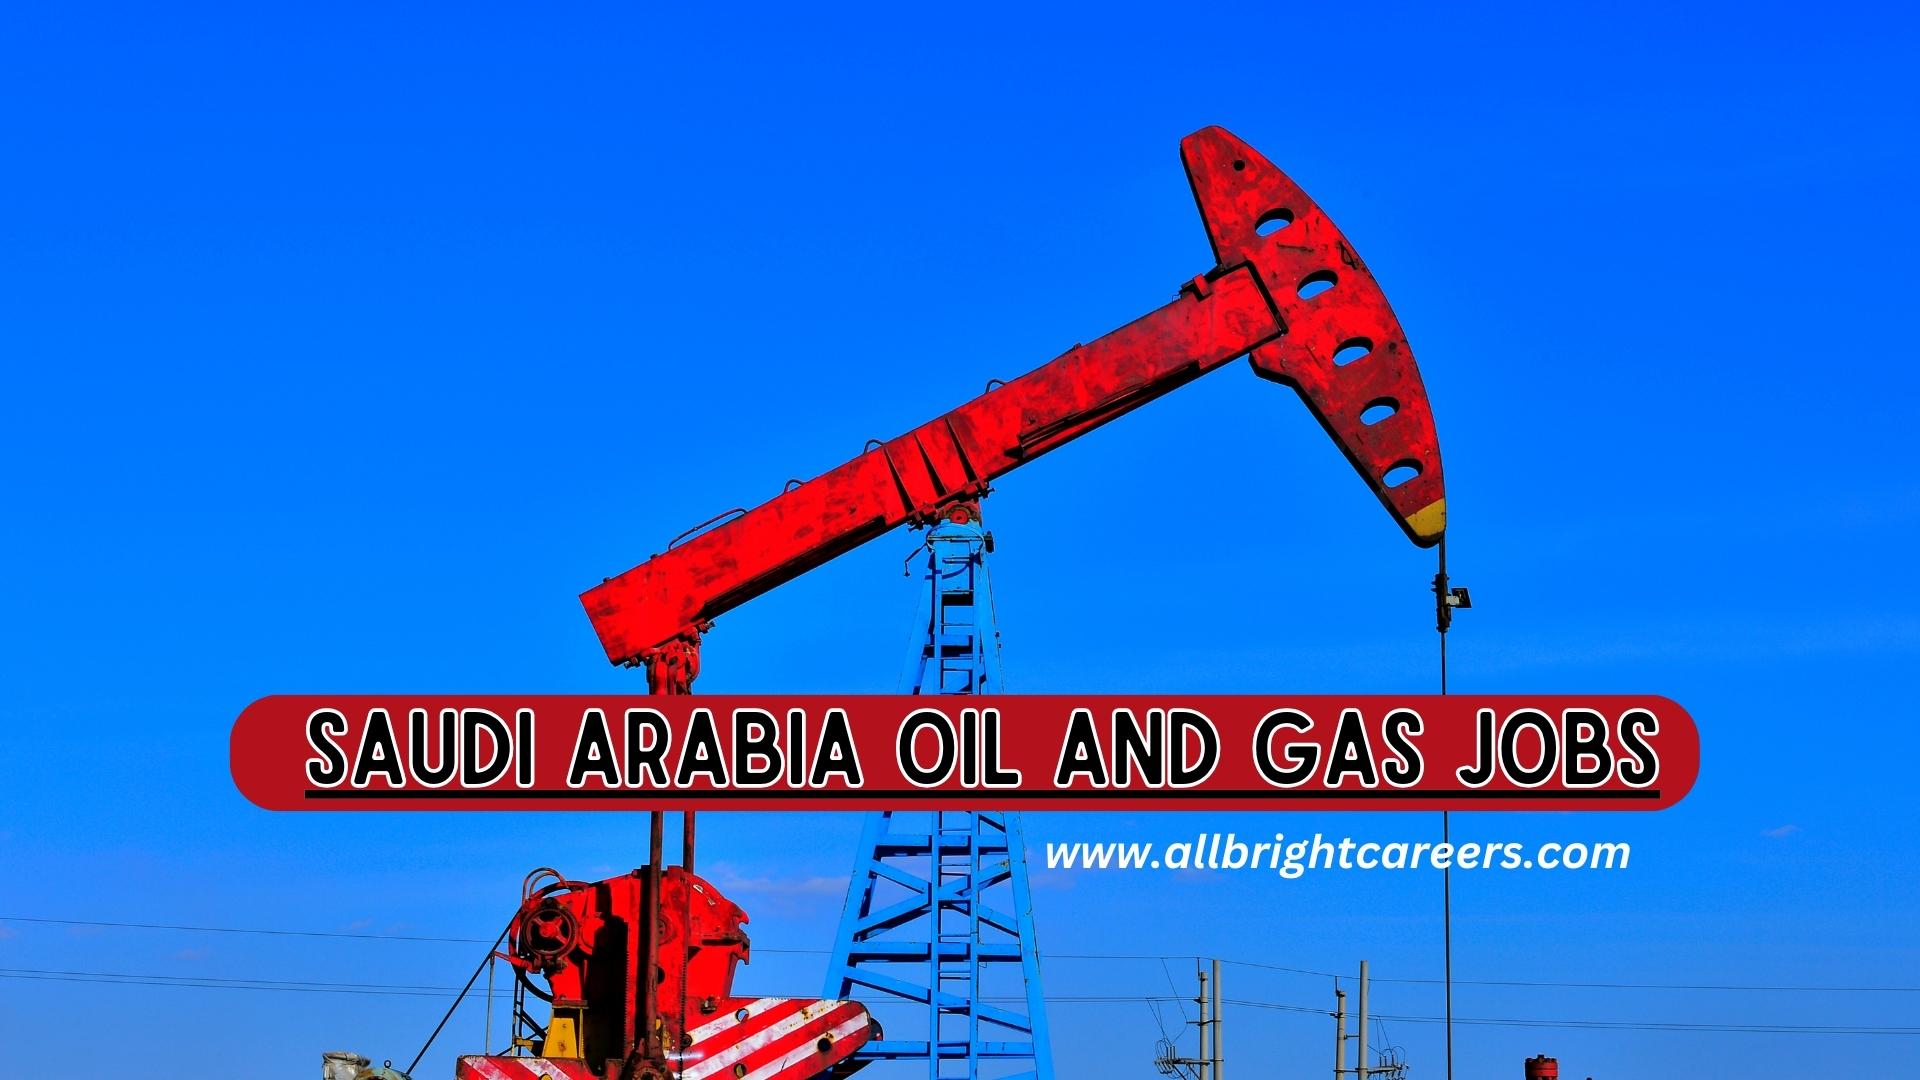 Saudi Arabia oil and gas jobs